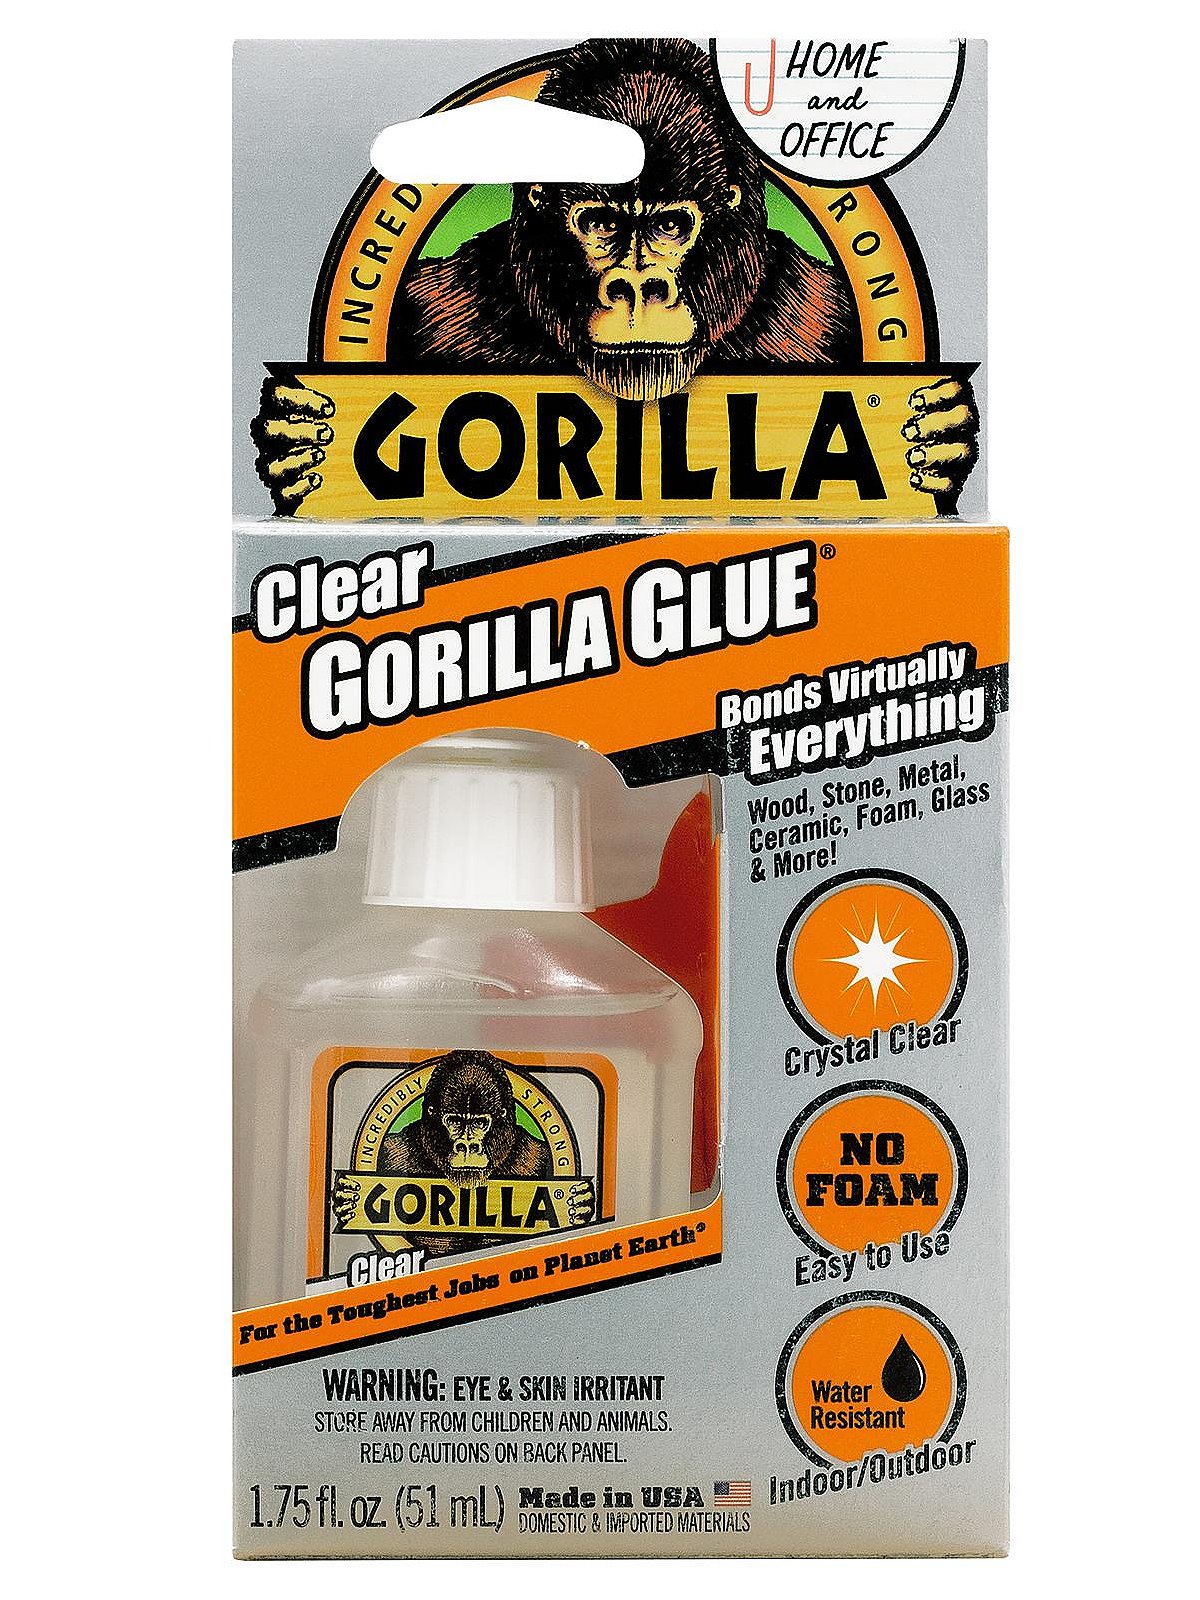 THE GORILLA GLUE COMPANY Clear Glue